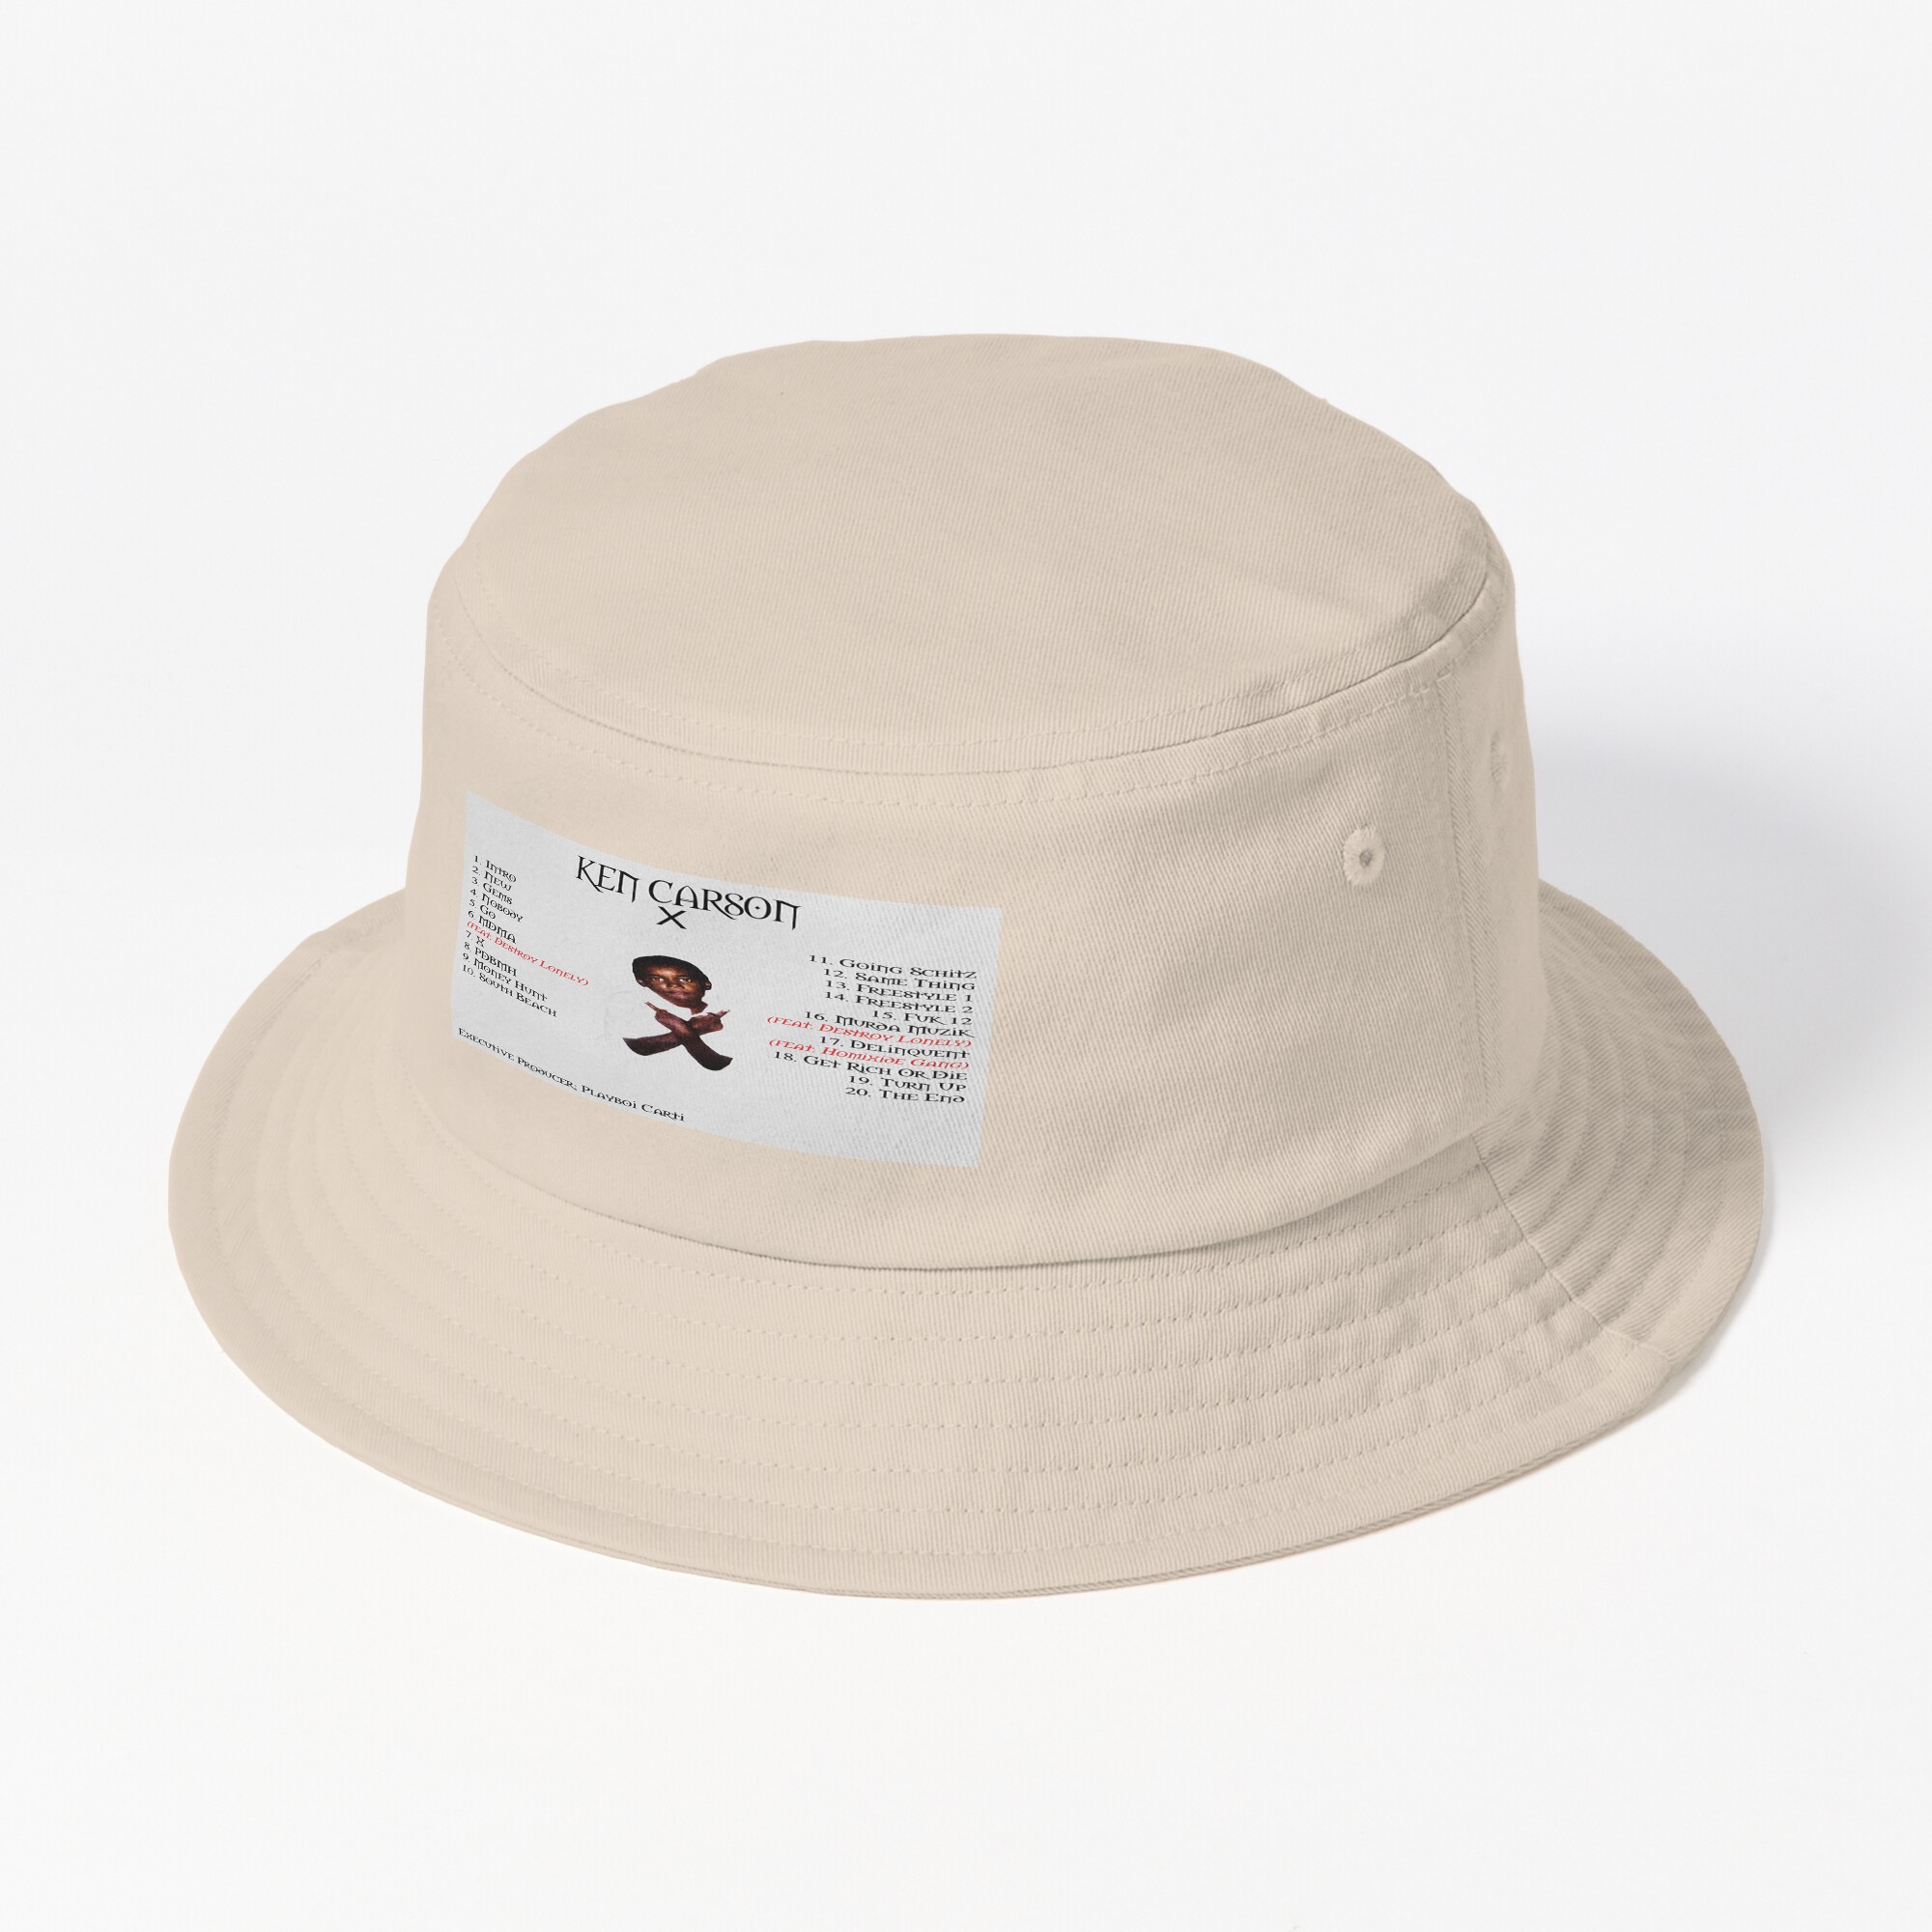 ssrcobucket hatproducte5d6c5f62bbf65eeprimarysquare2000x2000 bgf8f8f8 9 - Ken Carson Shop